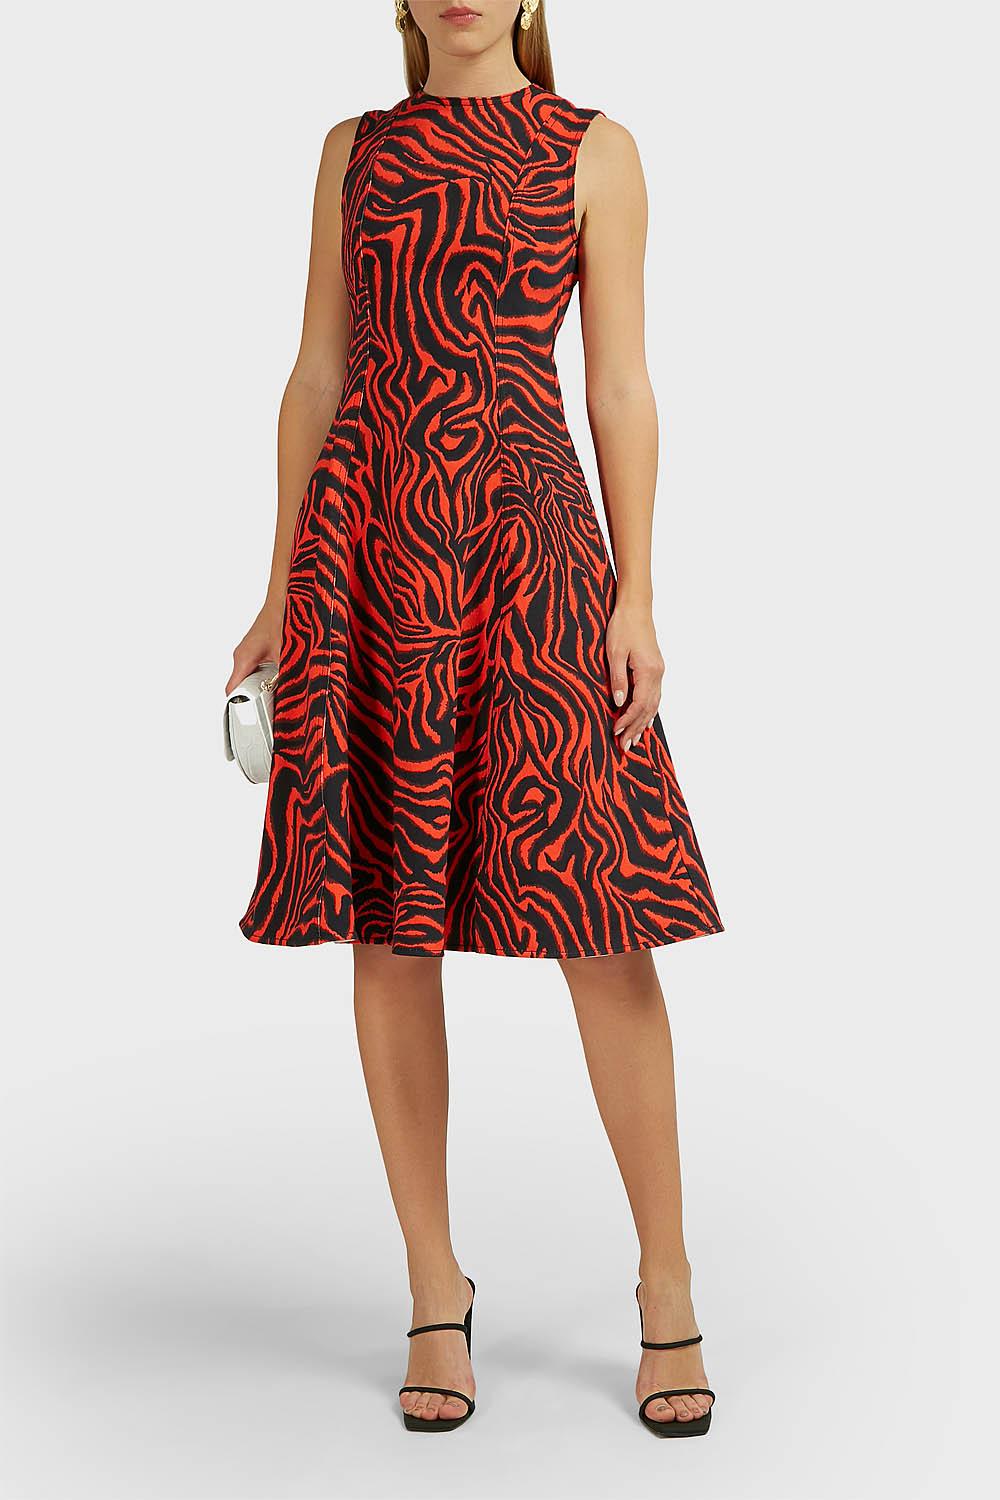 Lyst - CALVIN KLEIN 205W39NYC Zebra-print Twill Midi-dress in Red ...